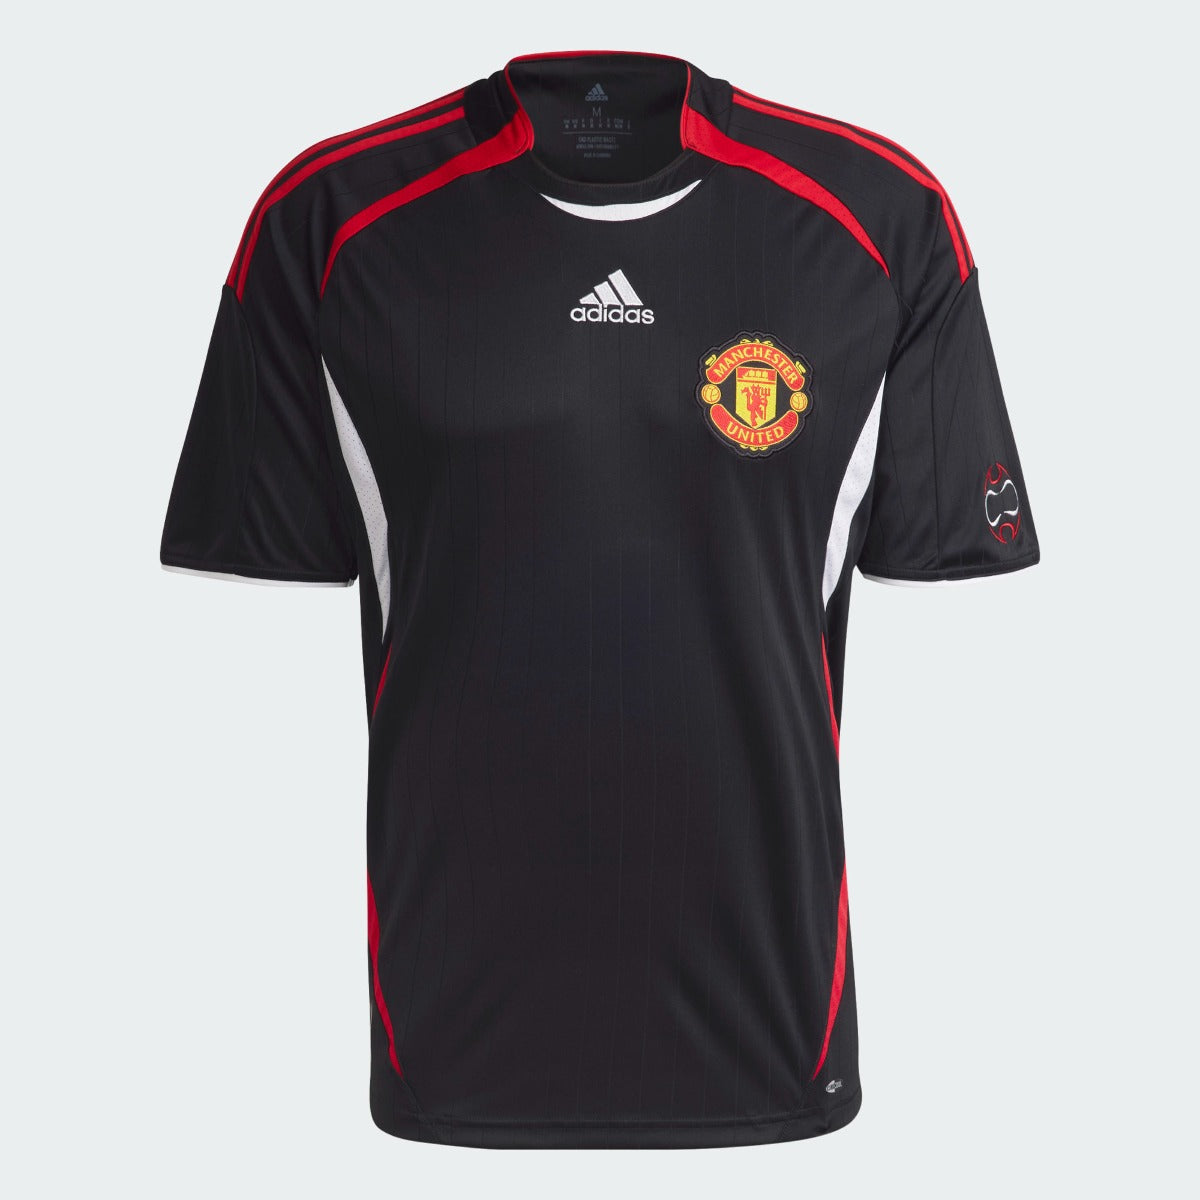 Adidas 2022 Manchester United Teamgeist Jersey - Black (Front)